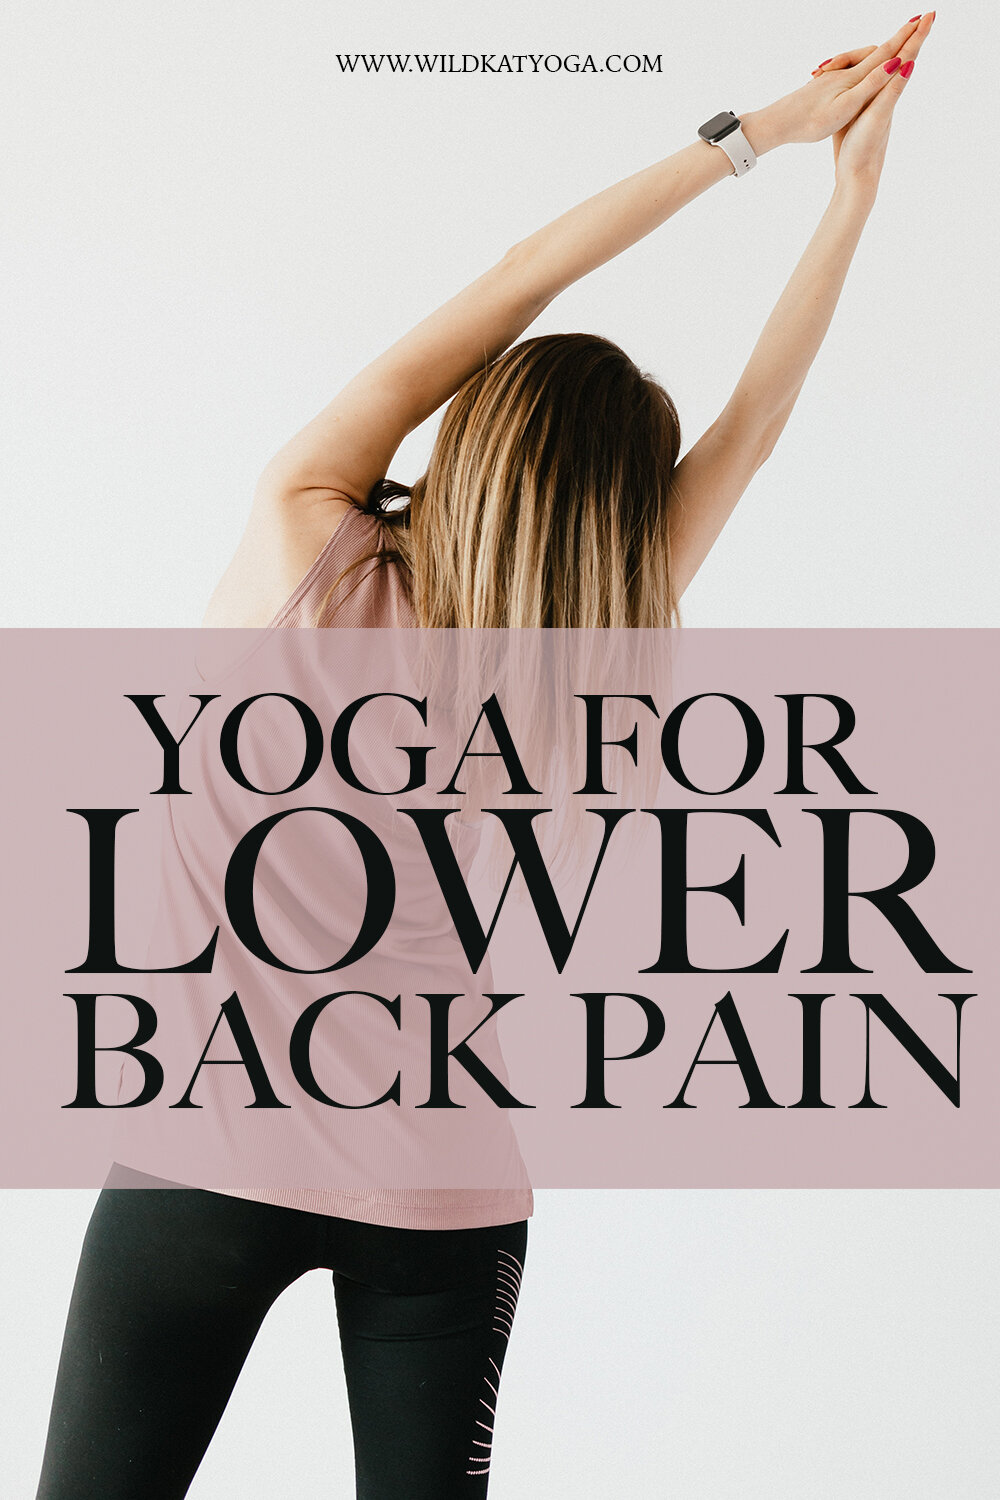 Yoga For Lower Back Pain Wild Kat Yoga